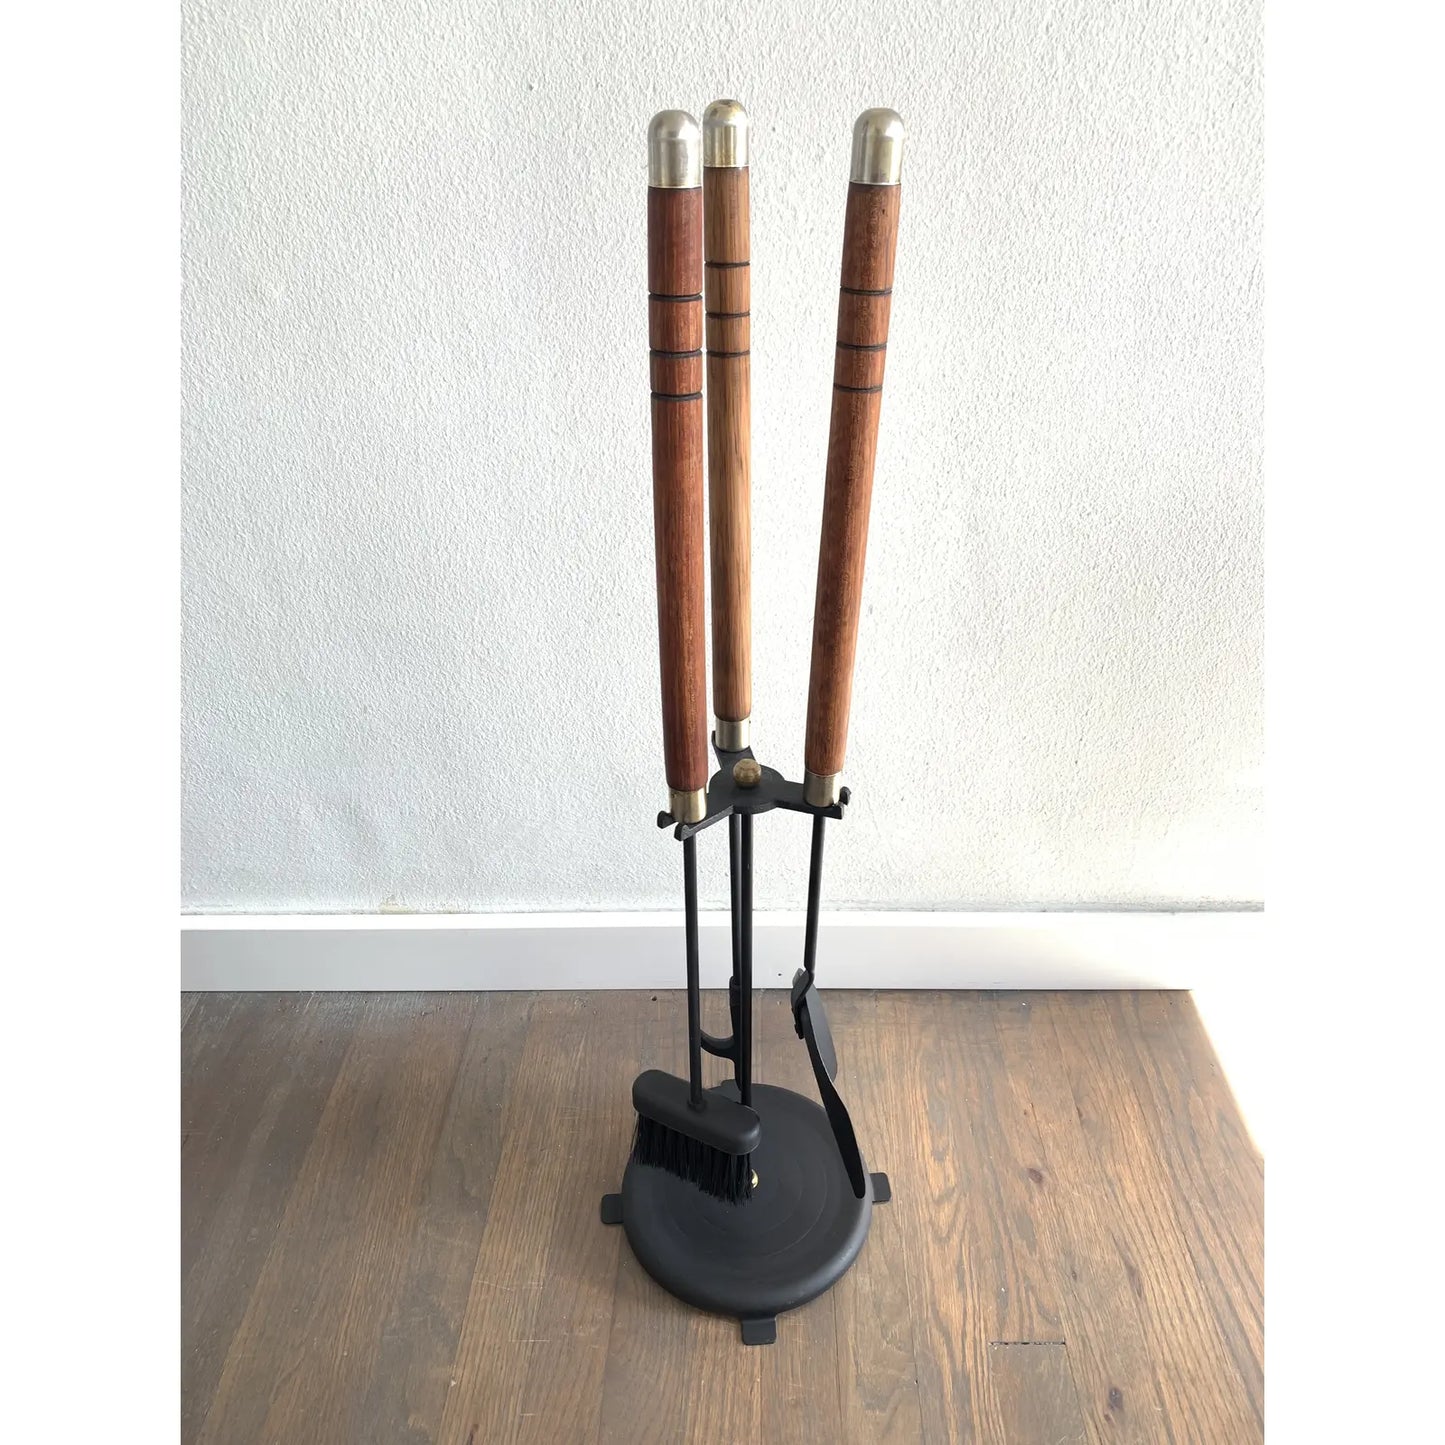 Mid-Century Modern Long Teak and Brass Handled Fireplace Tool Set - 4 Pieces